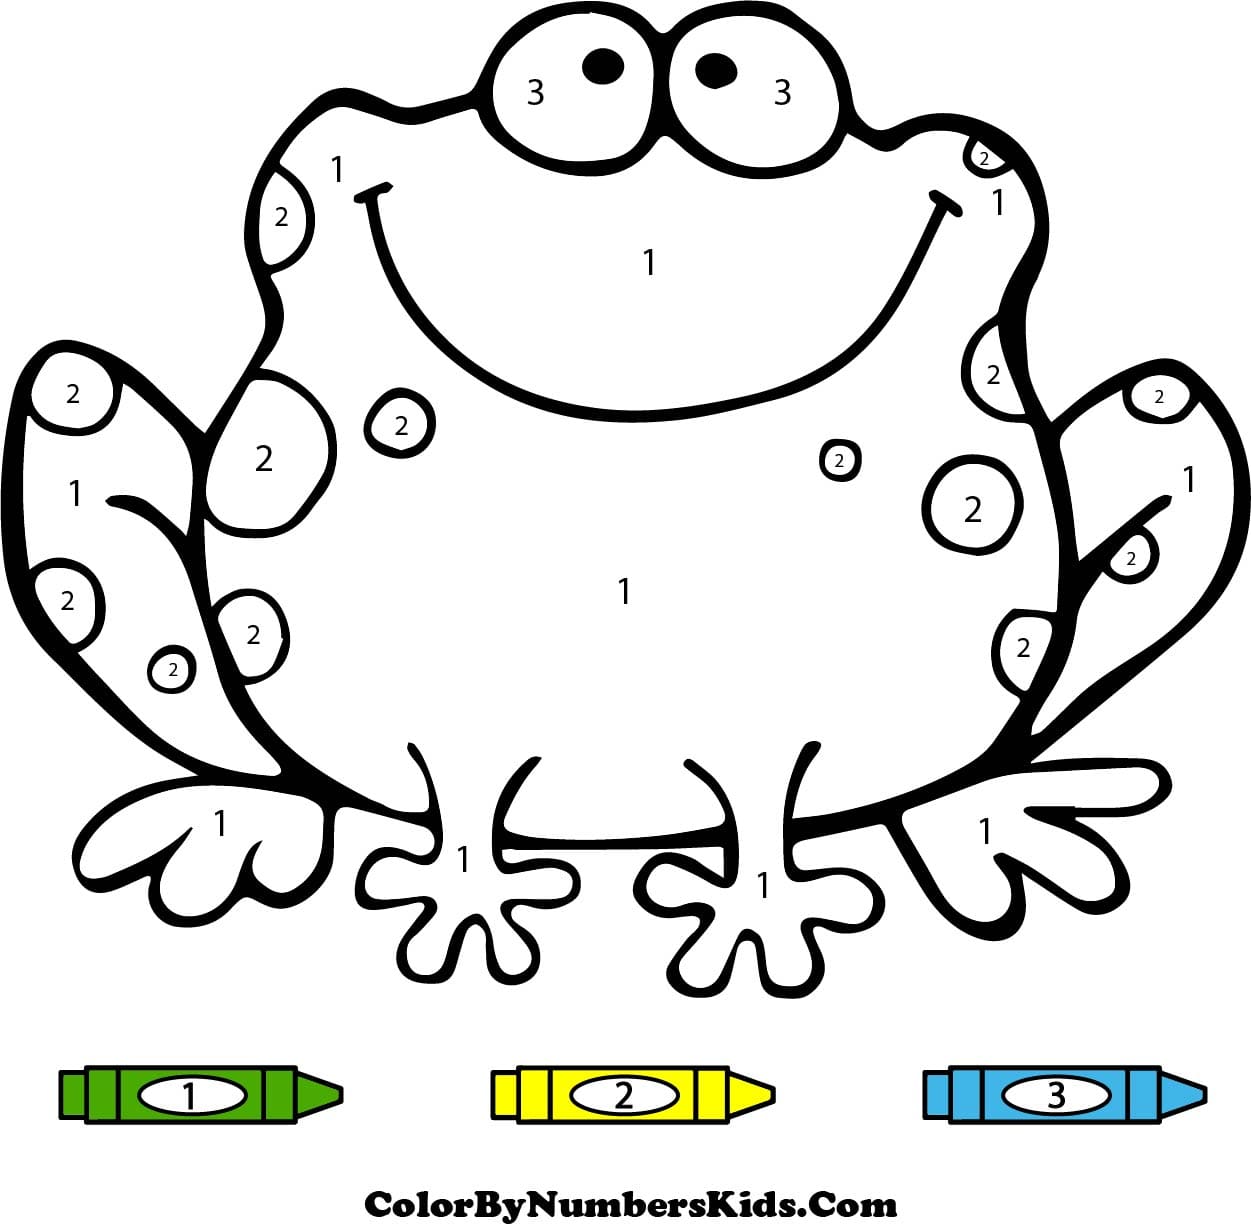 Printable Frog Color By Number Worksheet